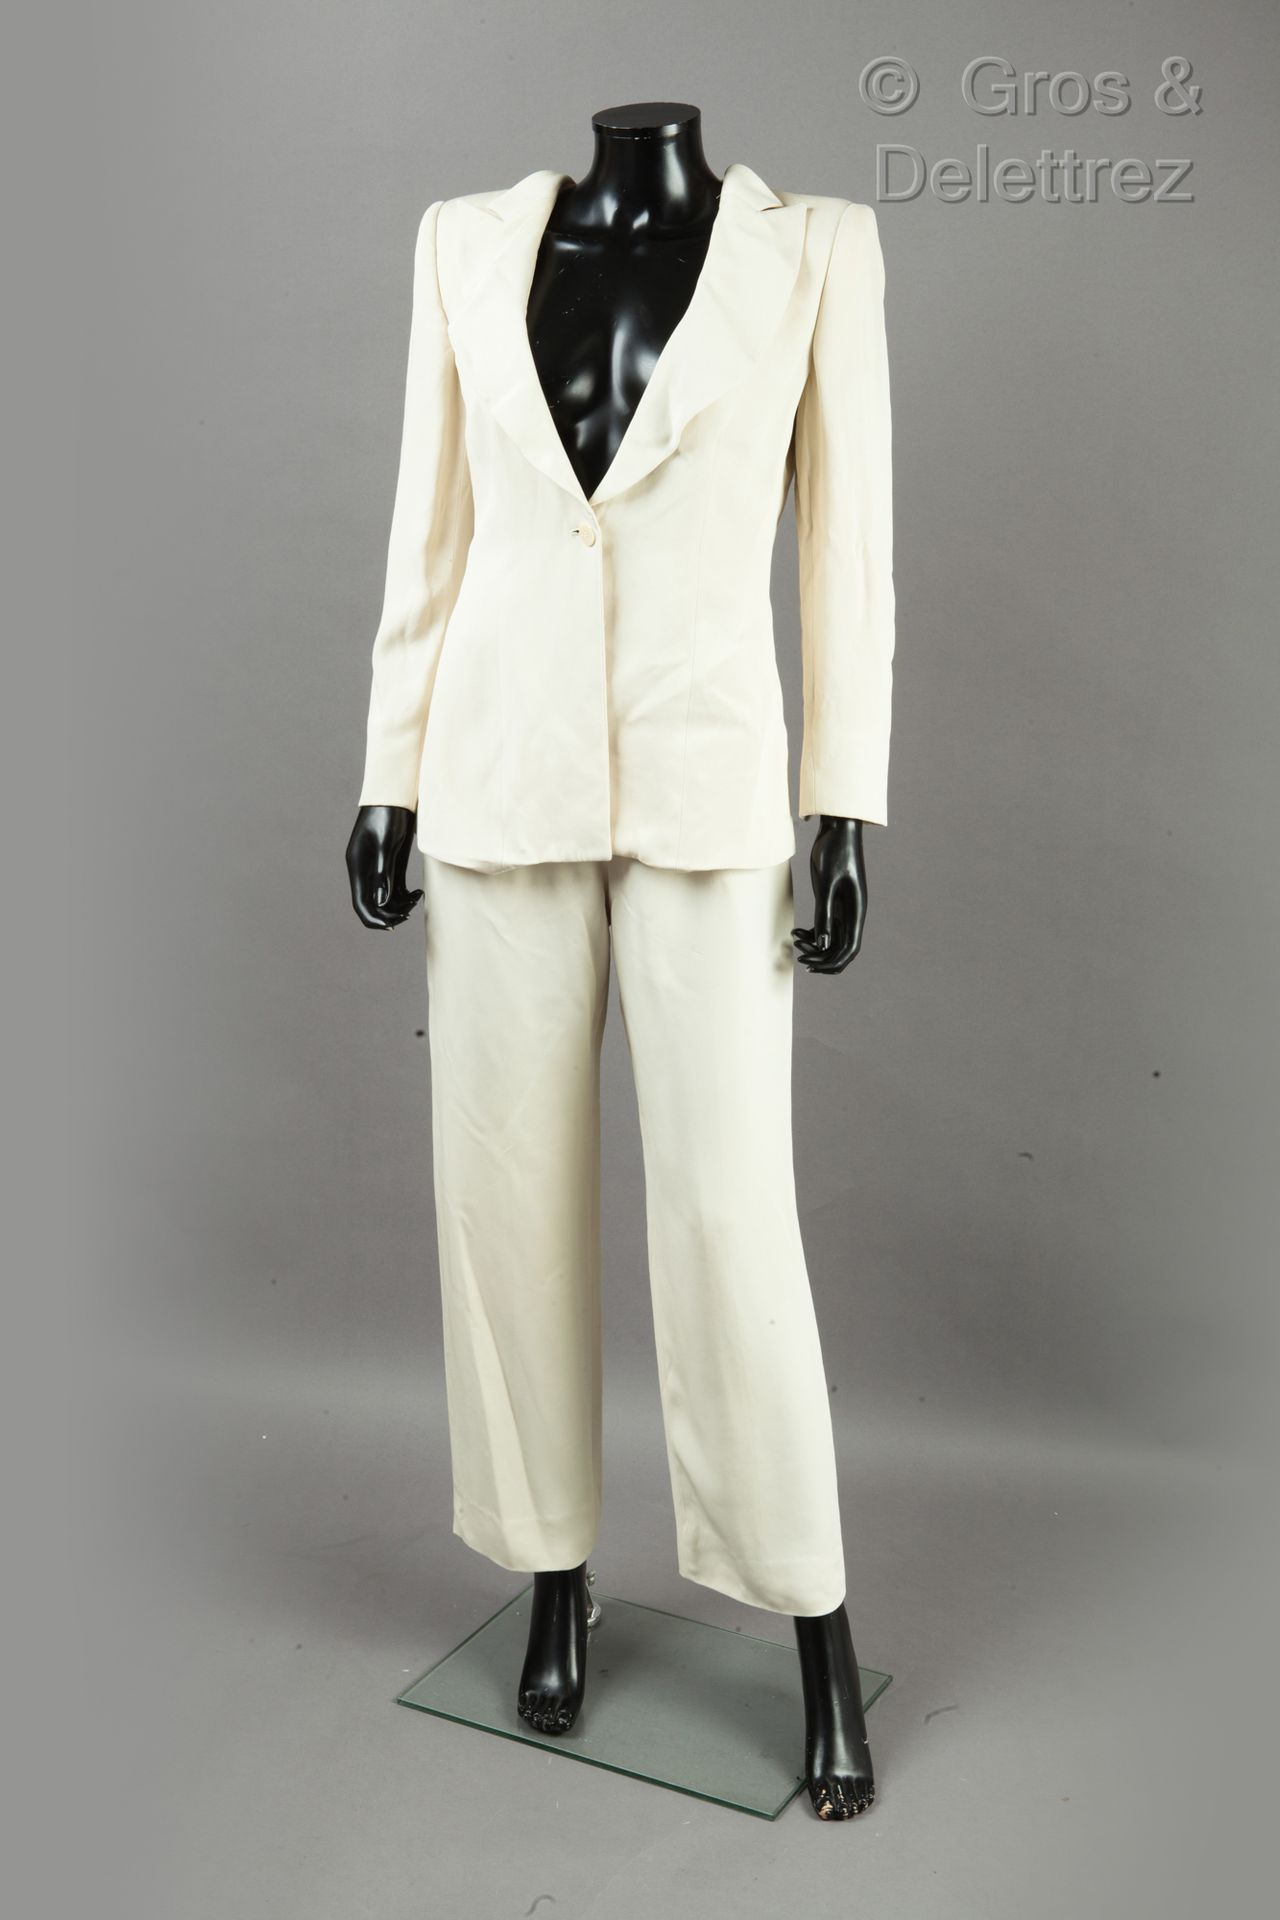 Giorgio ARMANI Suit in ecru silk crepe, made up of a jacket, ruffled shawl colla&hellip;